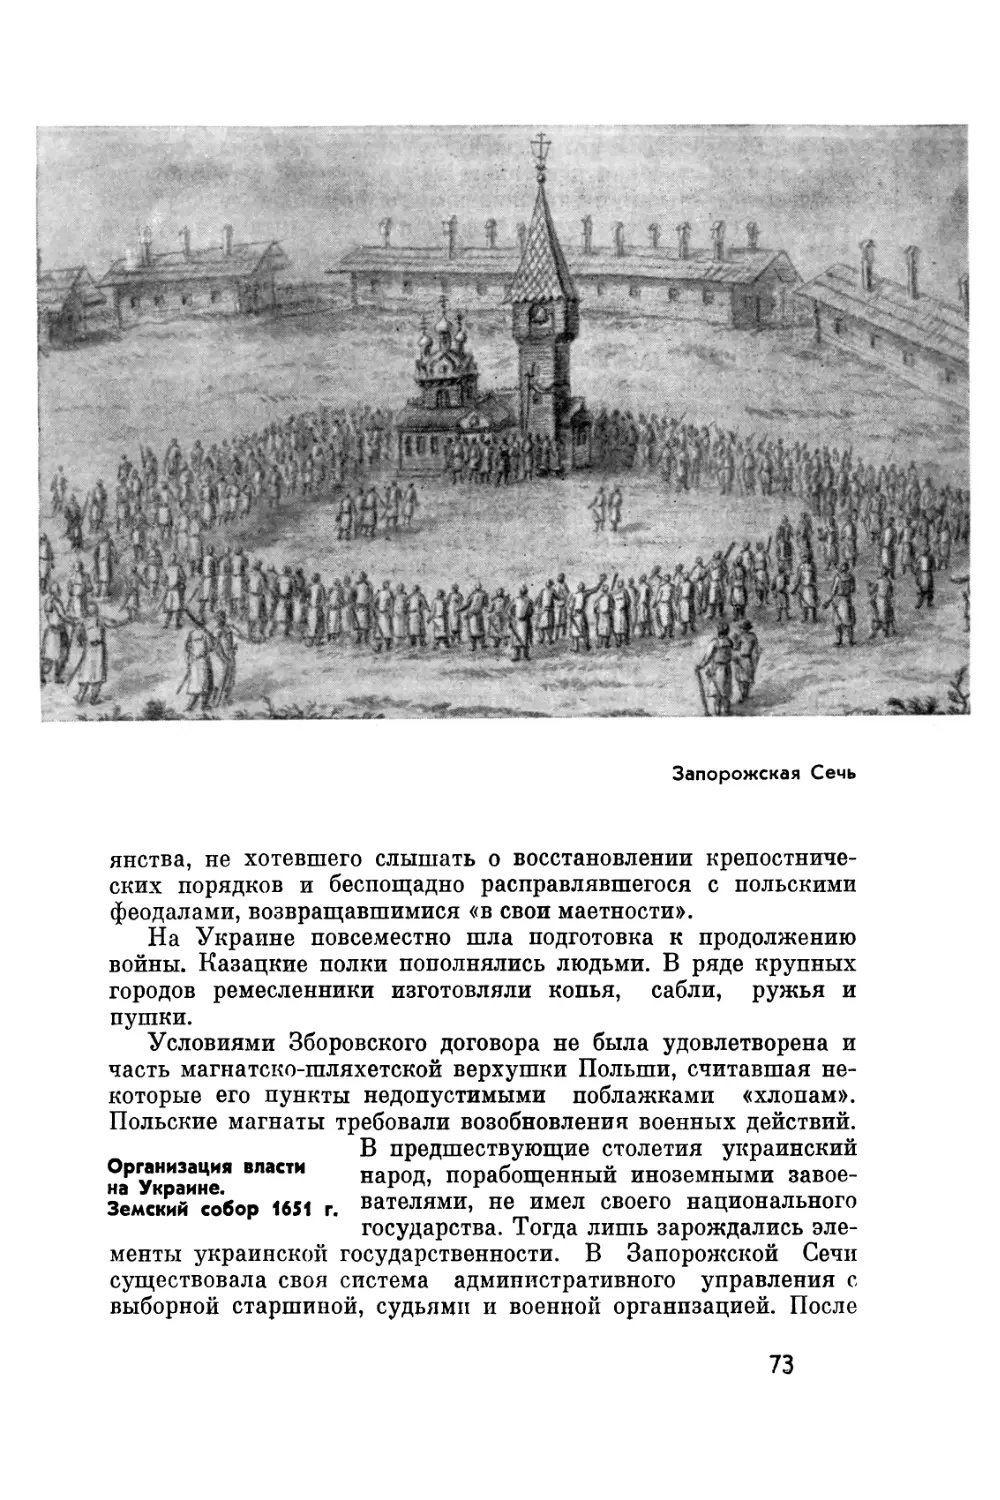 Организация власти на Украине. Земский собор 1651 г.